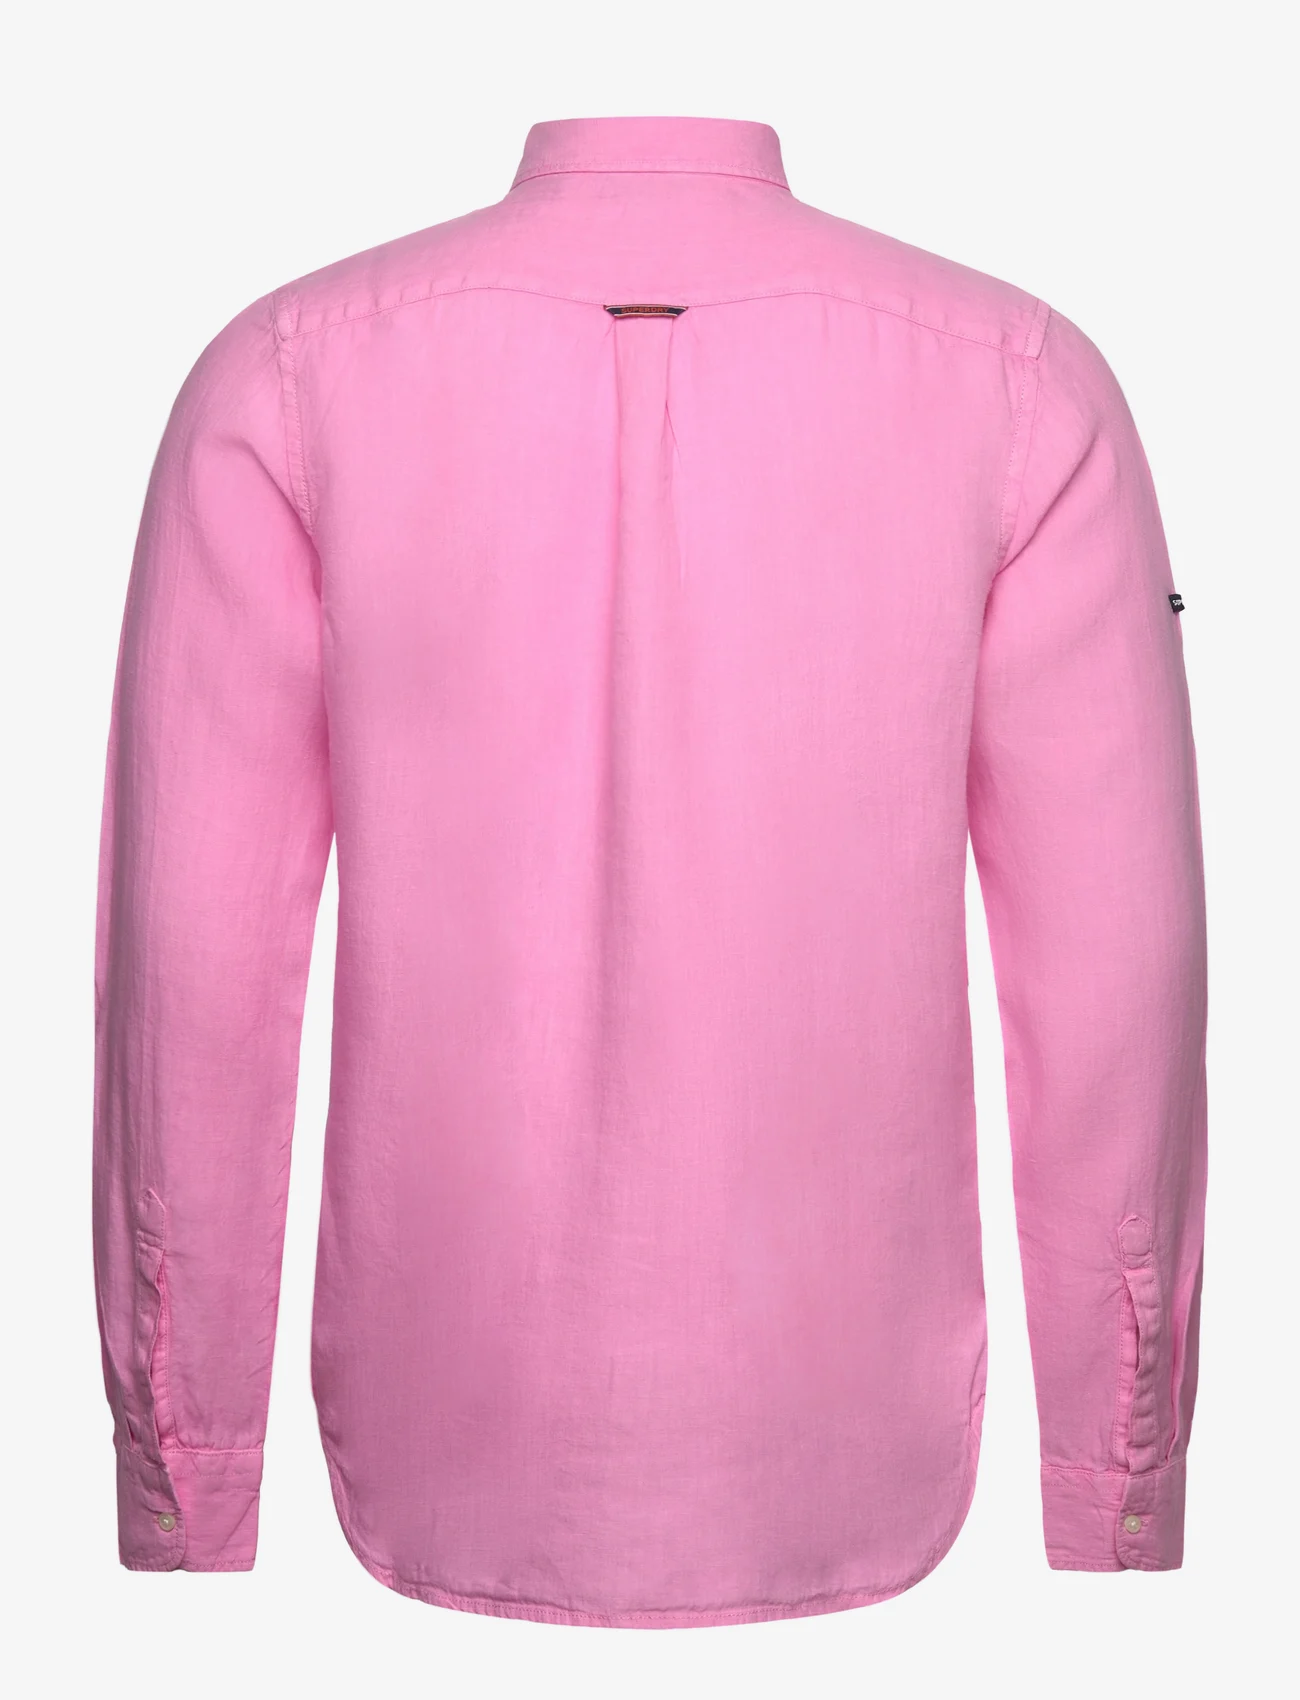 Superdry - STUDIOS CASUAL LINEN L/S SHIRT - lininiai marškiniai - fuchsia pink - 1